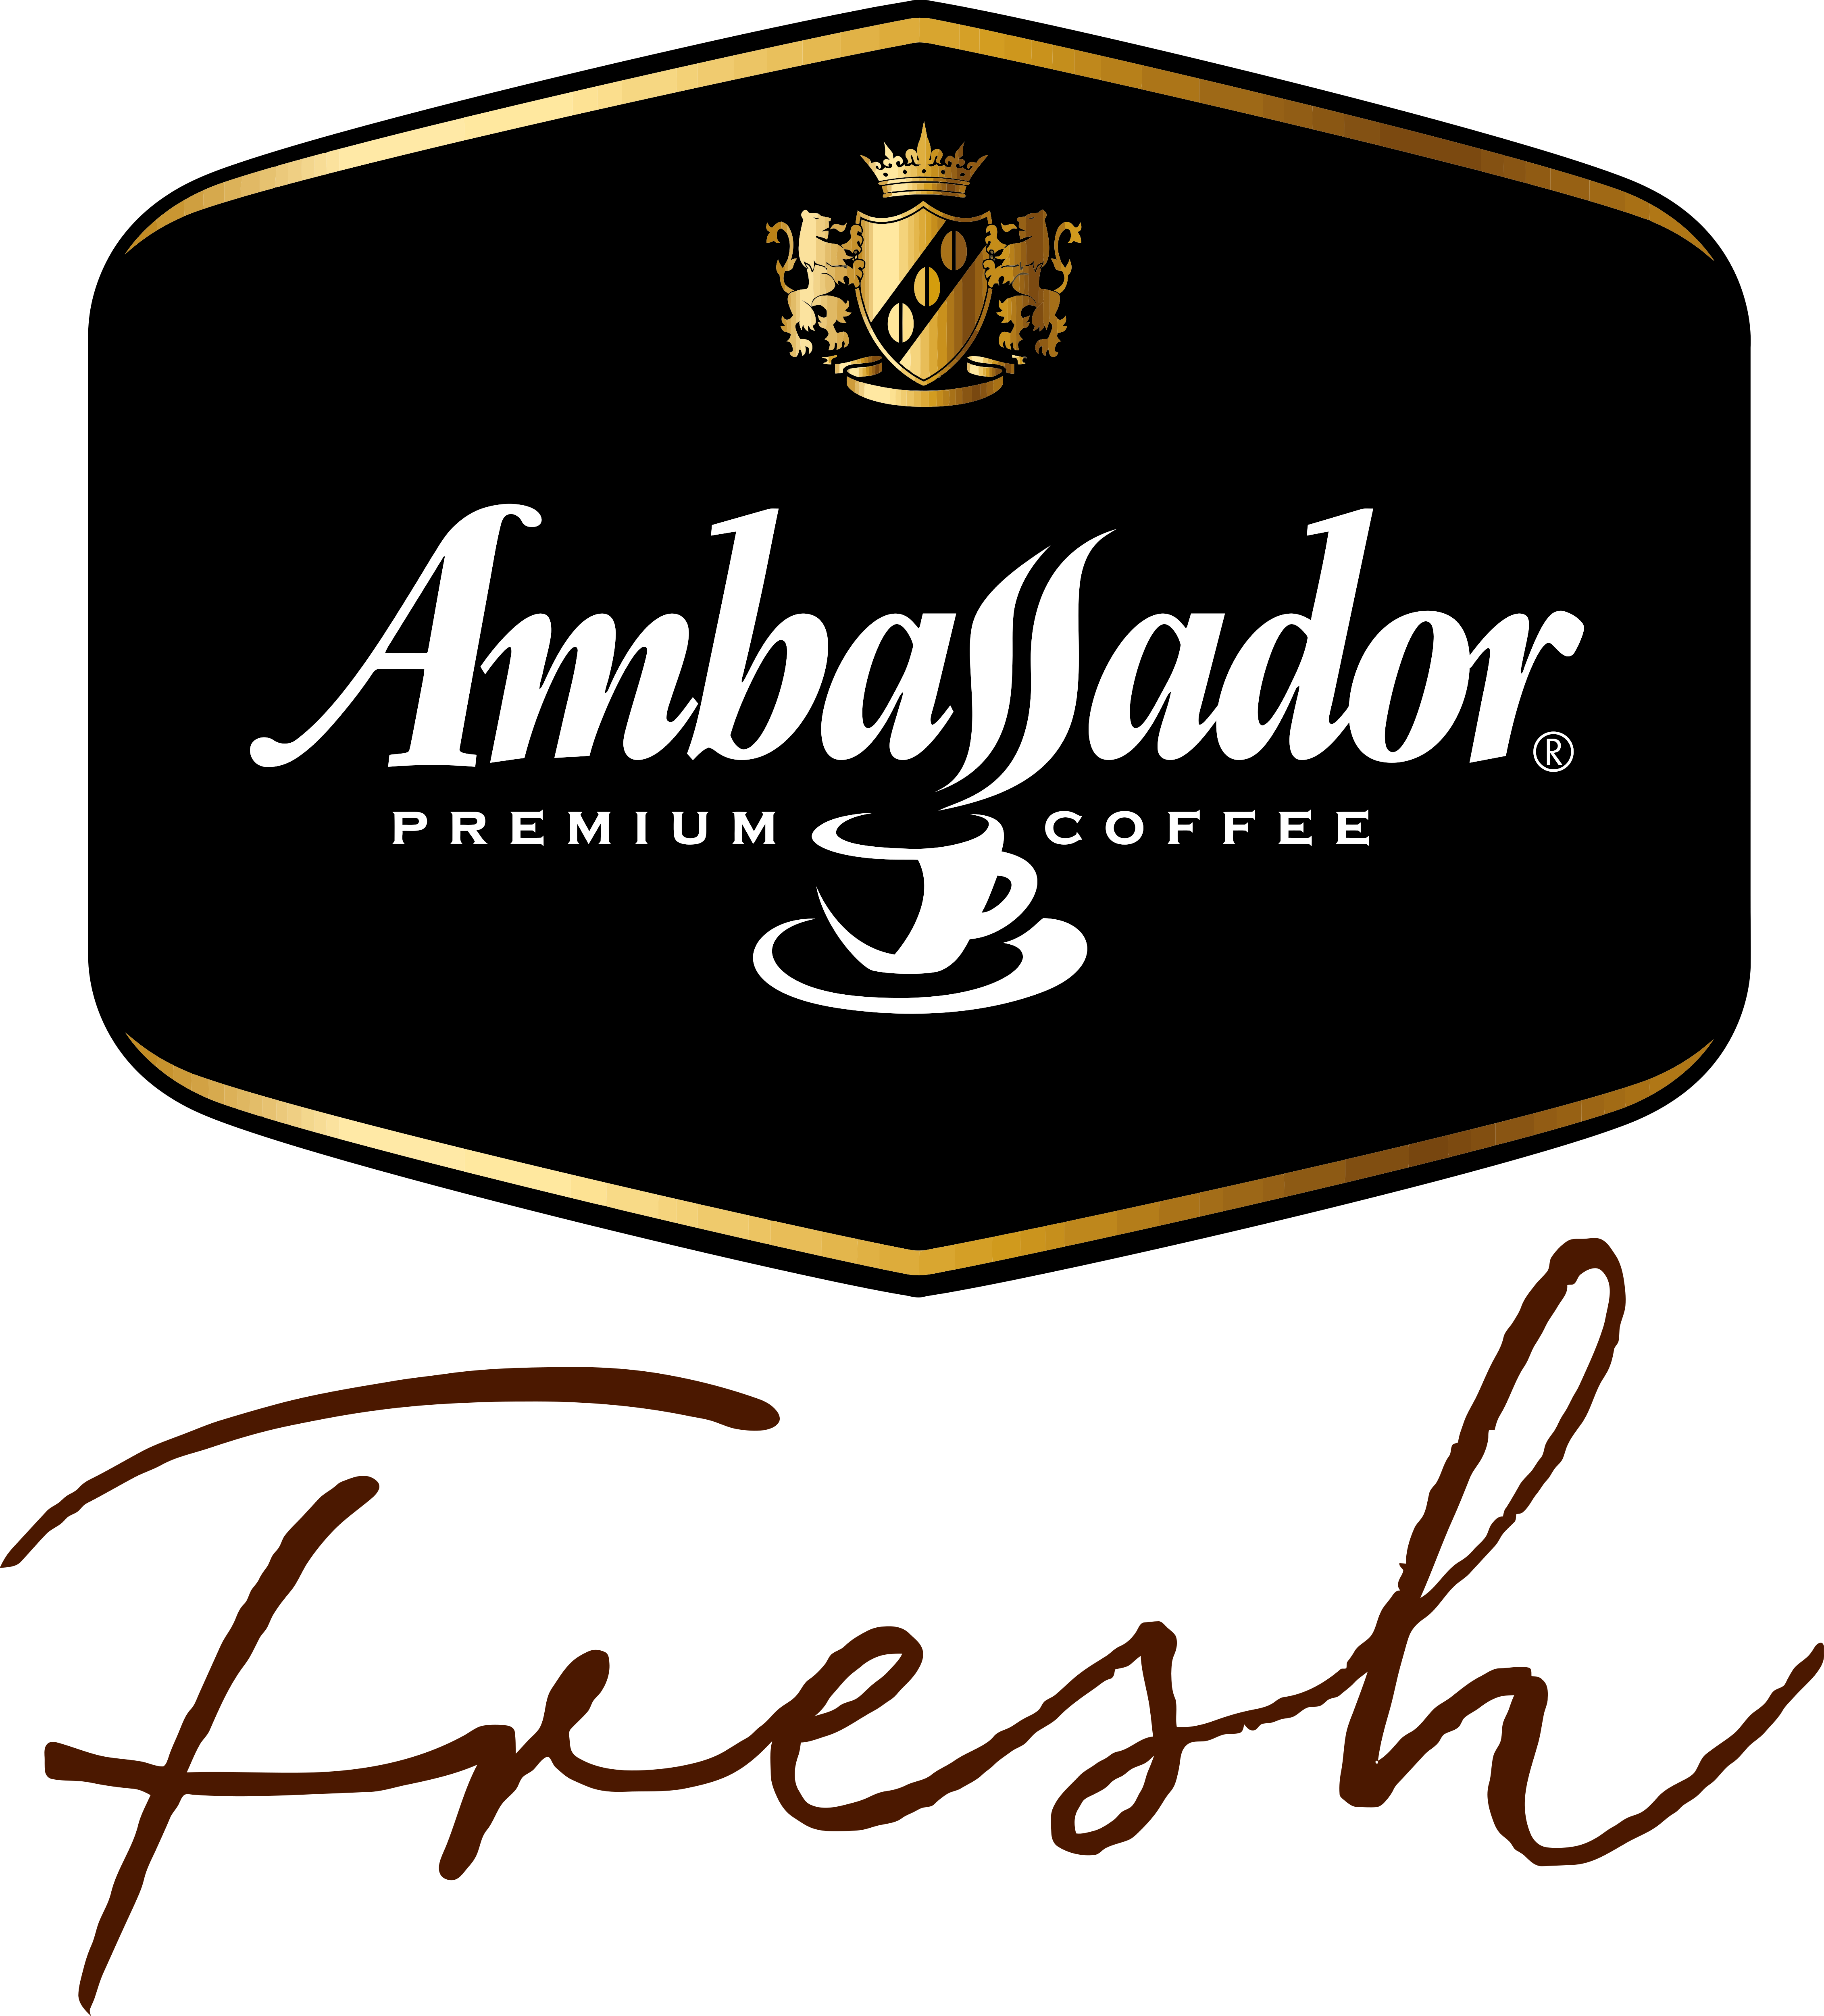 ambassador-logos-download